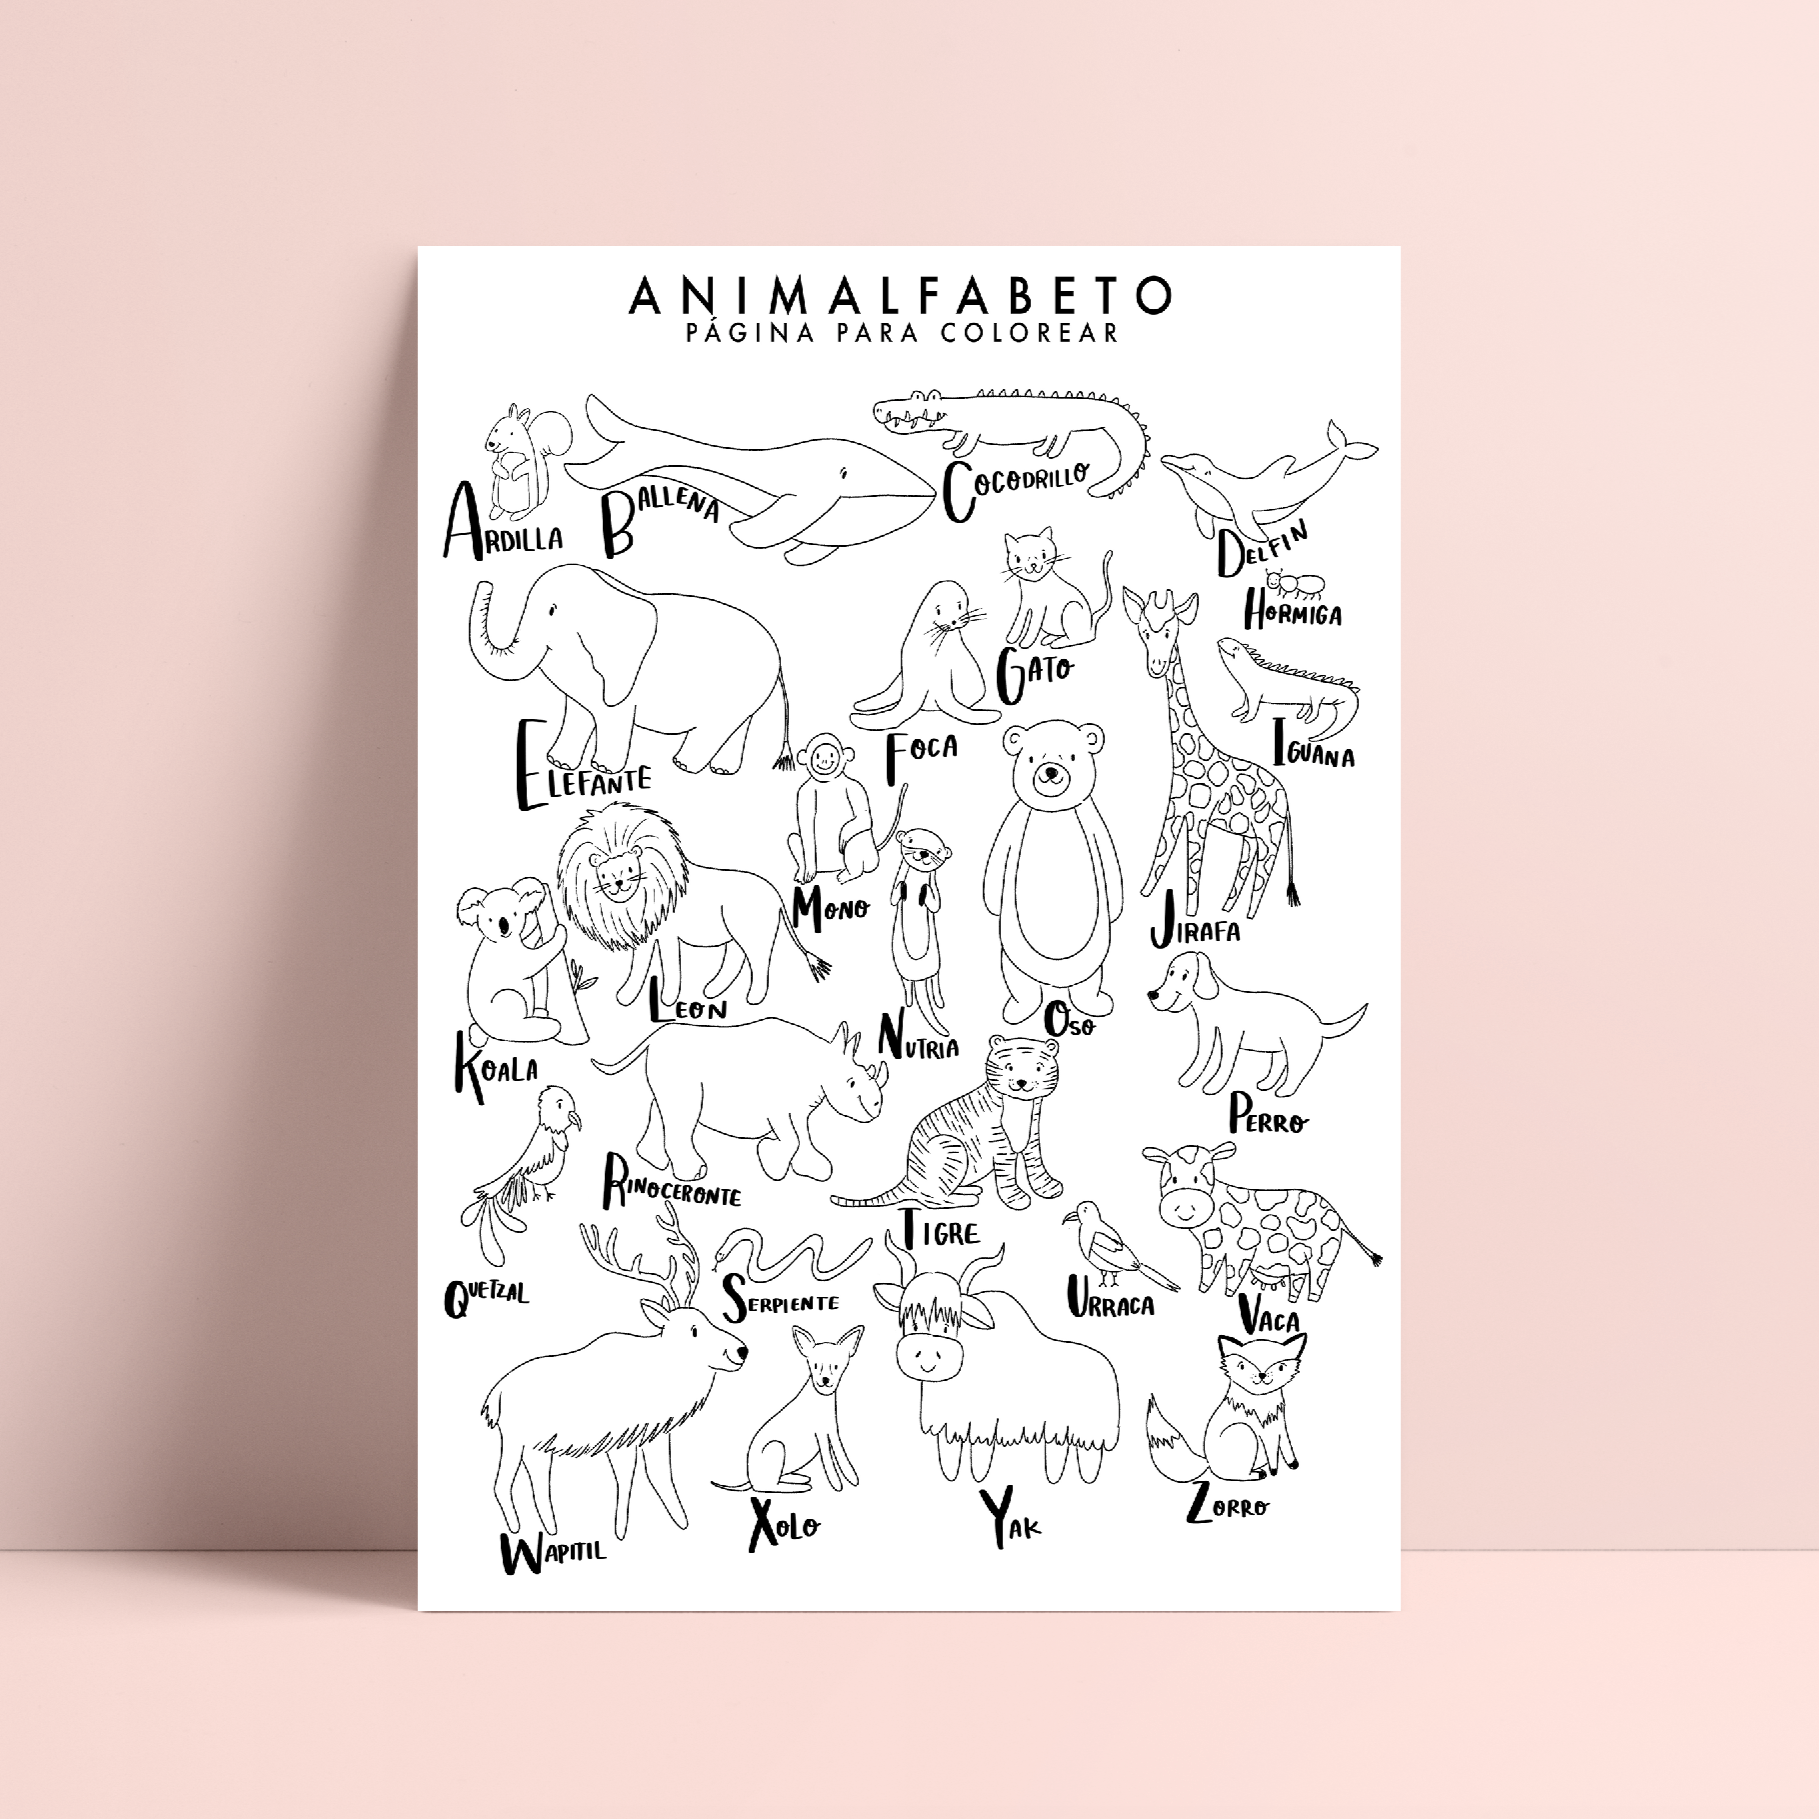 Printable animalfabeto coloring page spanish â lux trip